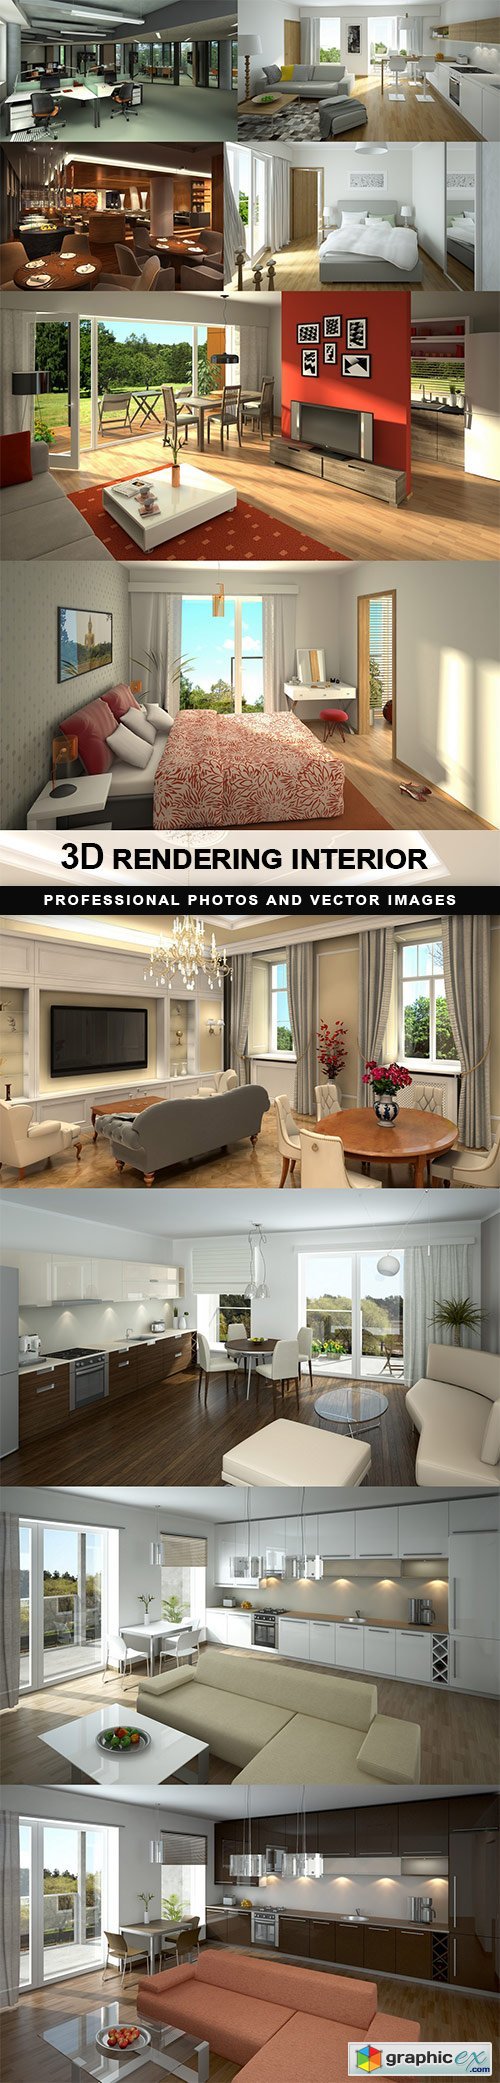 3D rendering interior